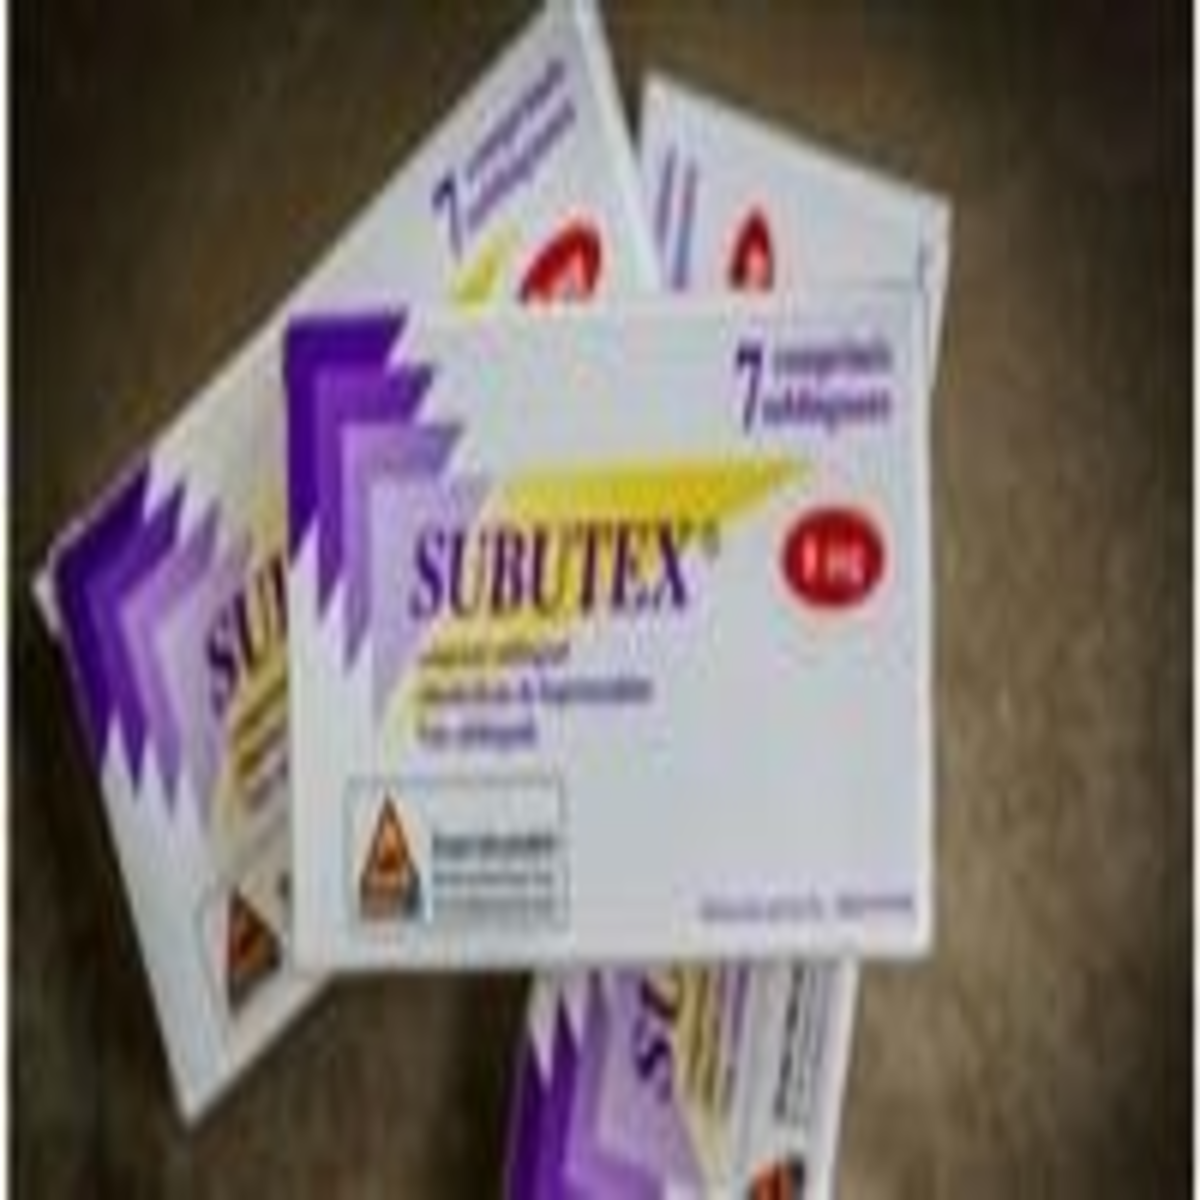 Subutex Buprenorphine 8mg/2mg HCL Tablets